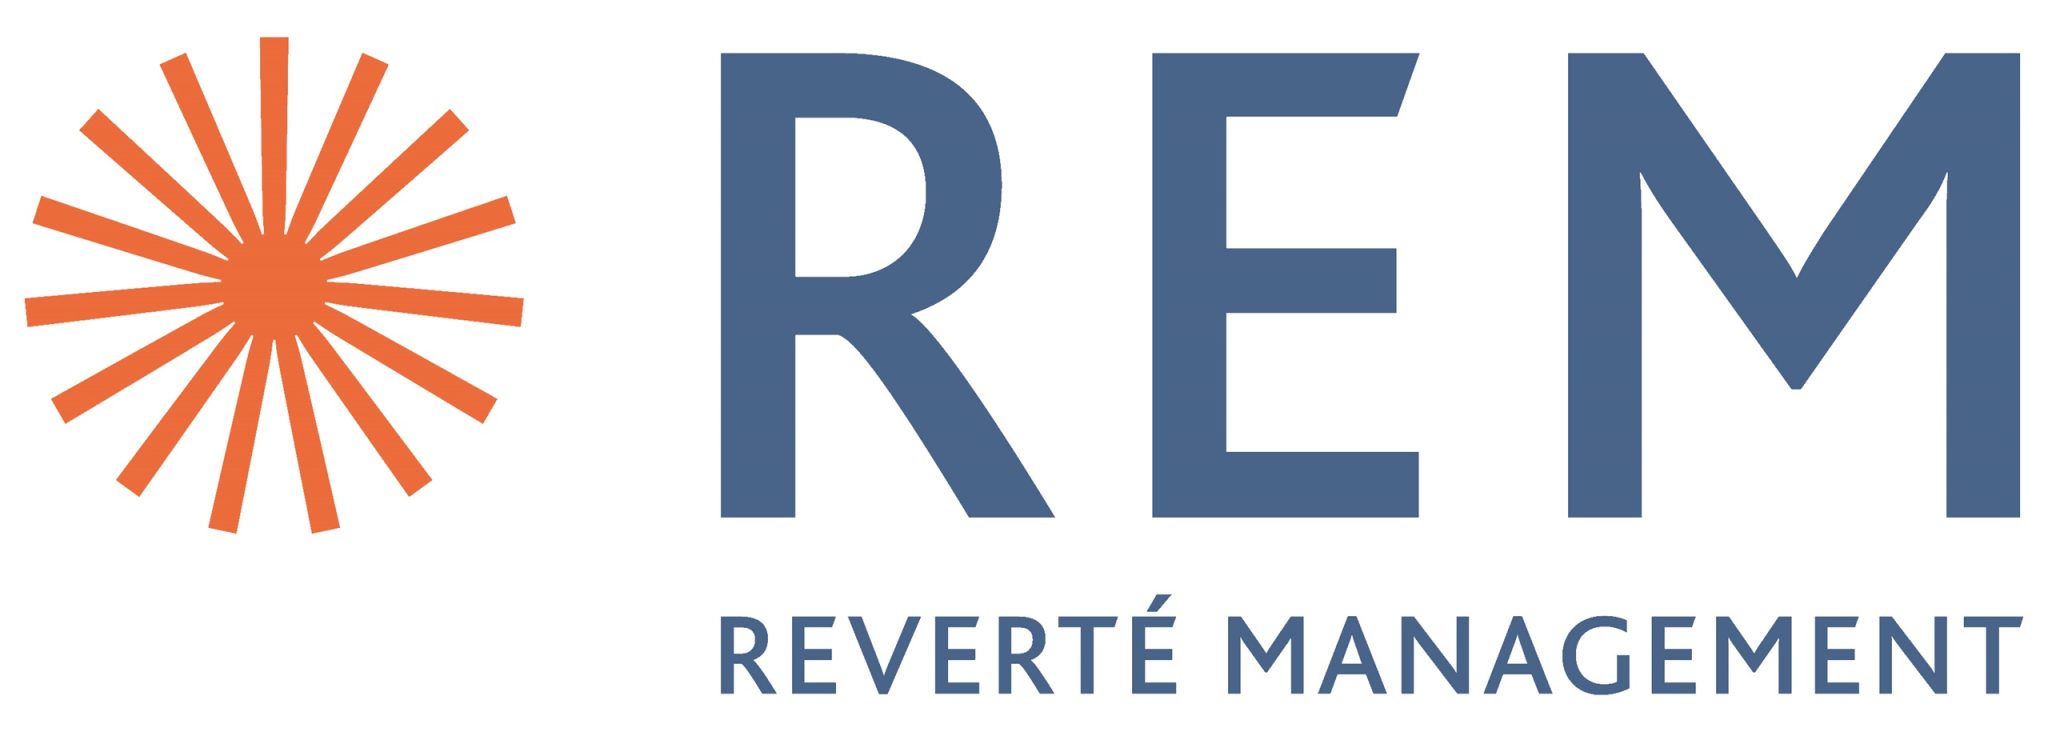 REM-Reverte Management Libros